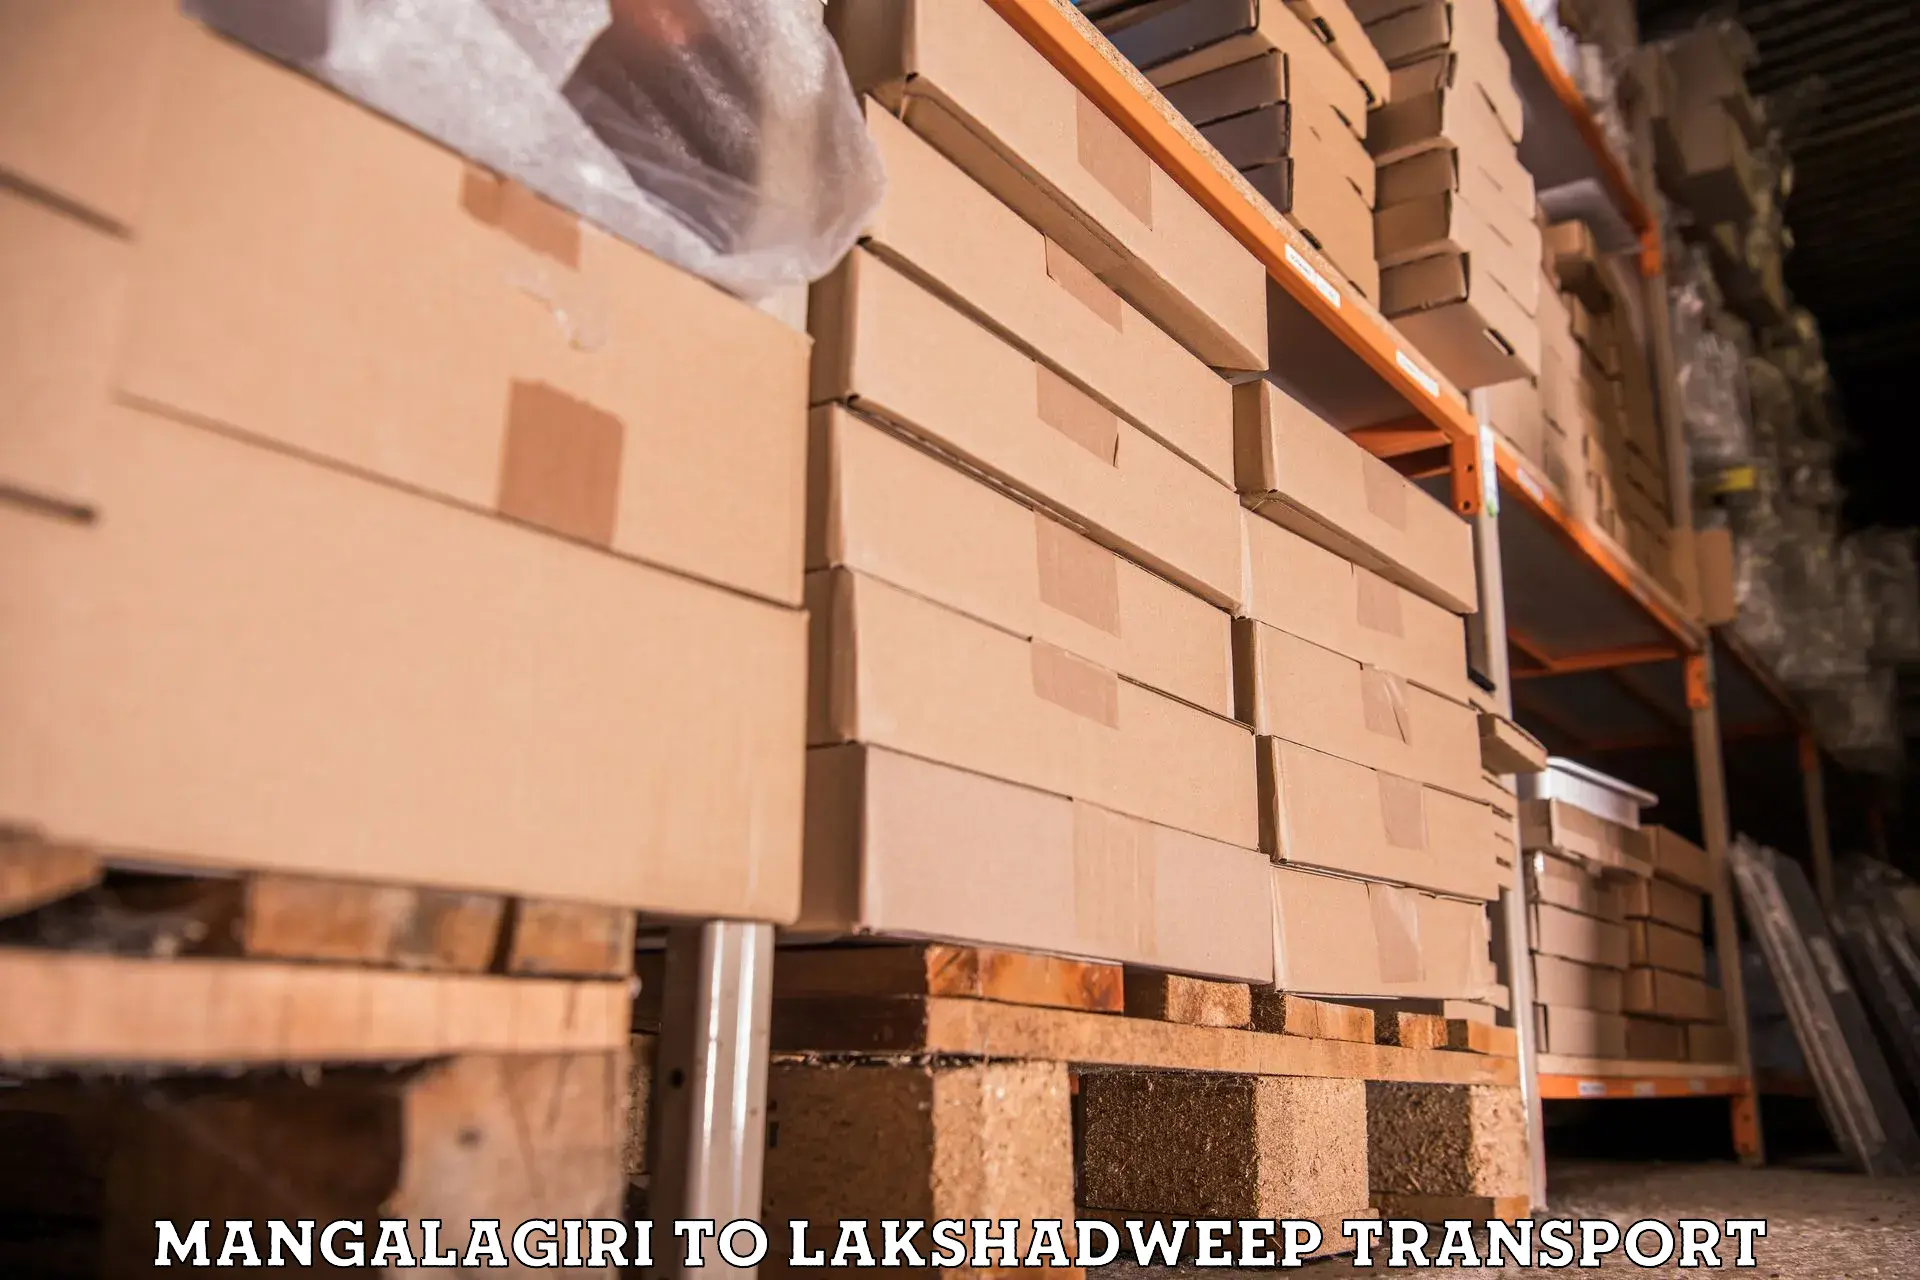 Truck transport companies in India Mangalagiri to Lakshadweep